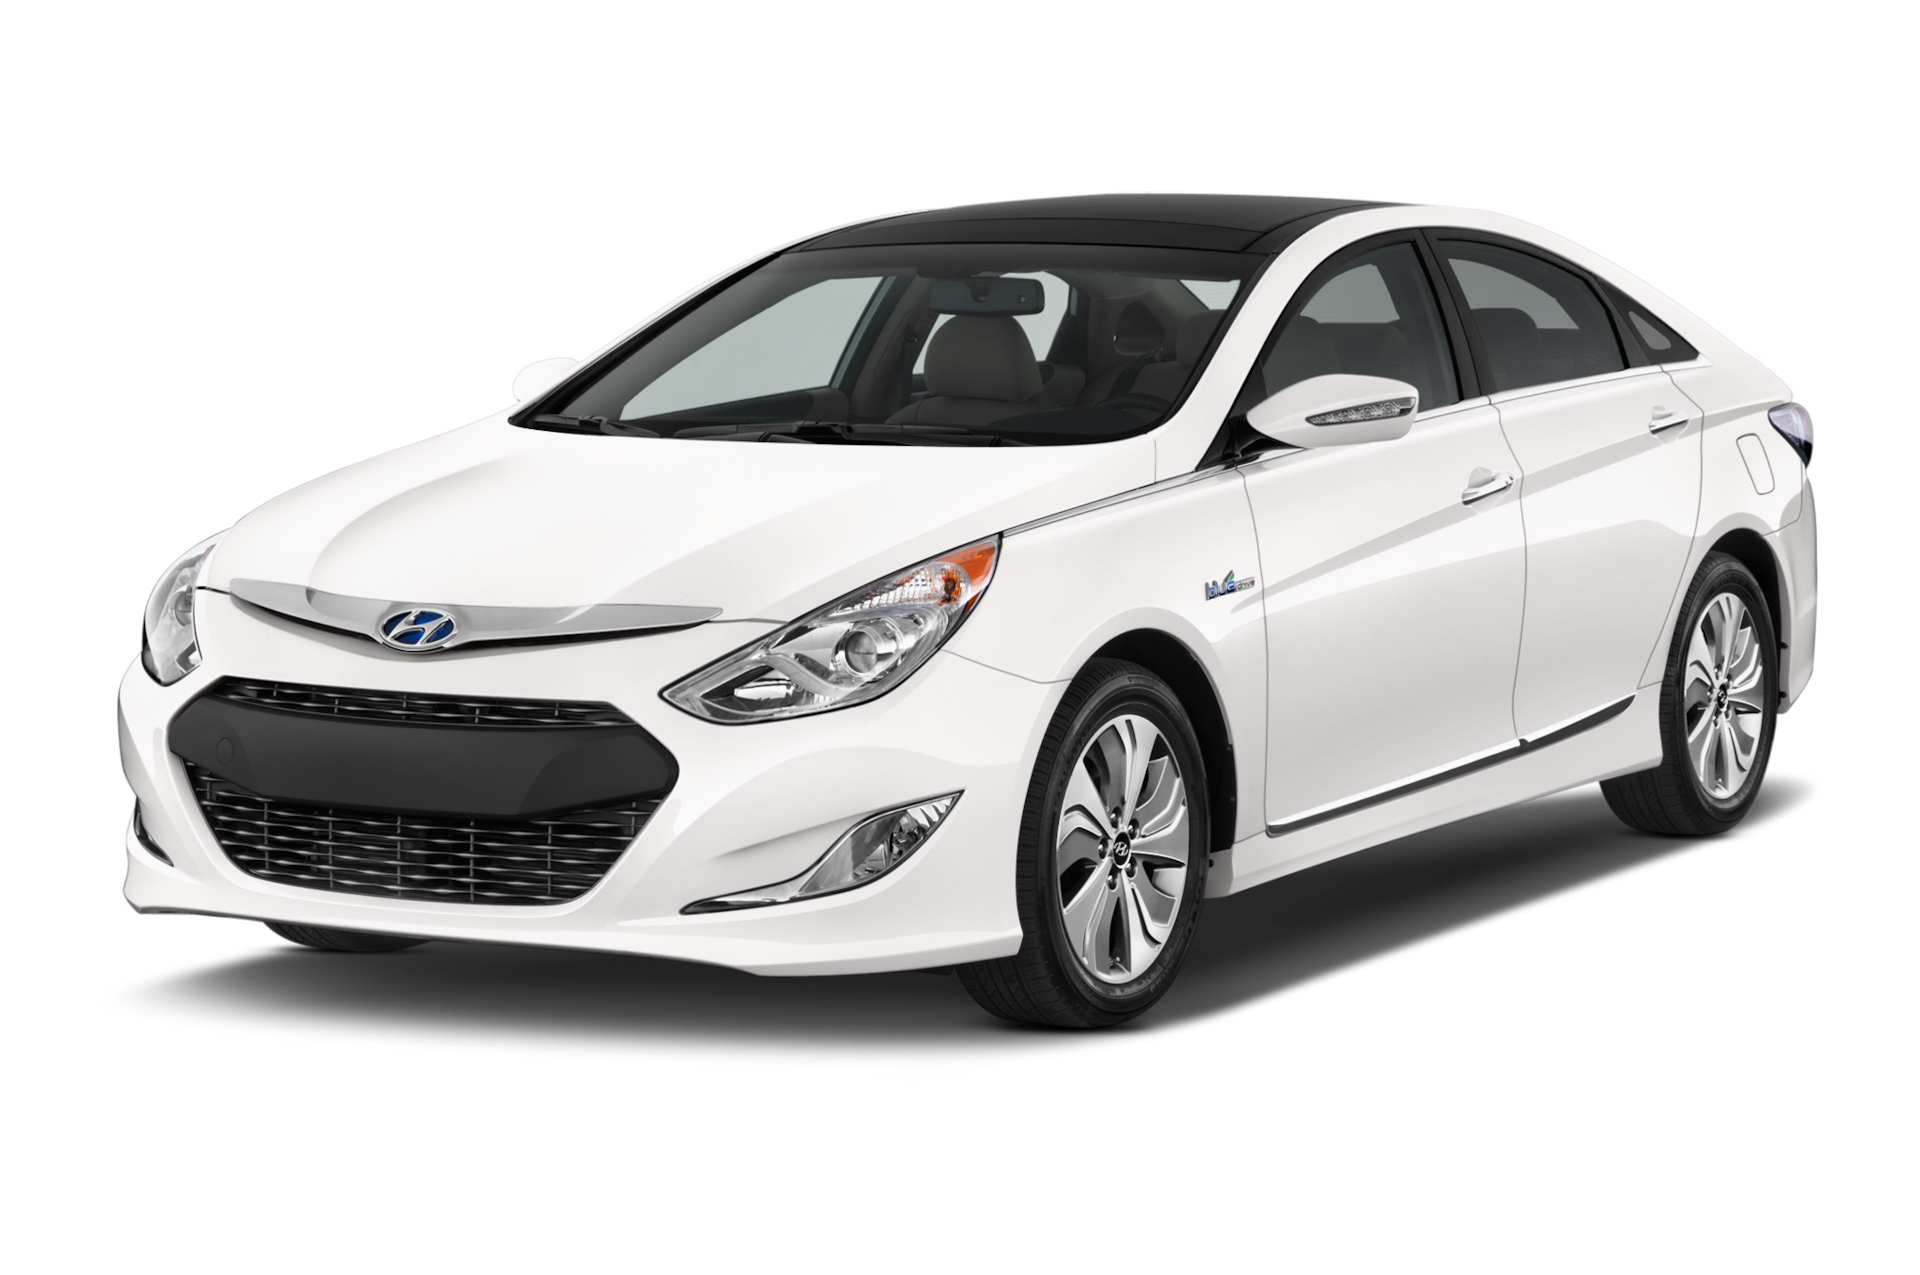 2014 Hyundai Sonata Hybrid Prices, Reviews, and Photos - MotorTrend